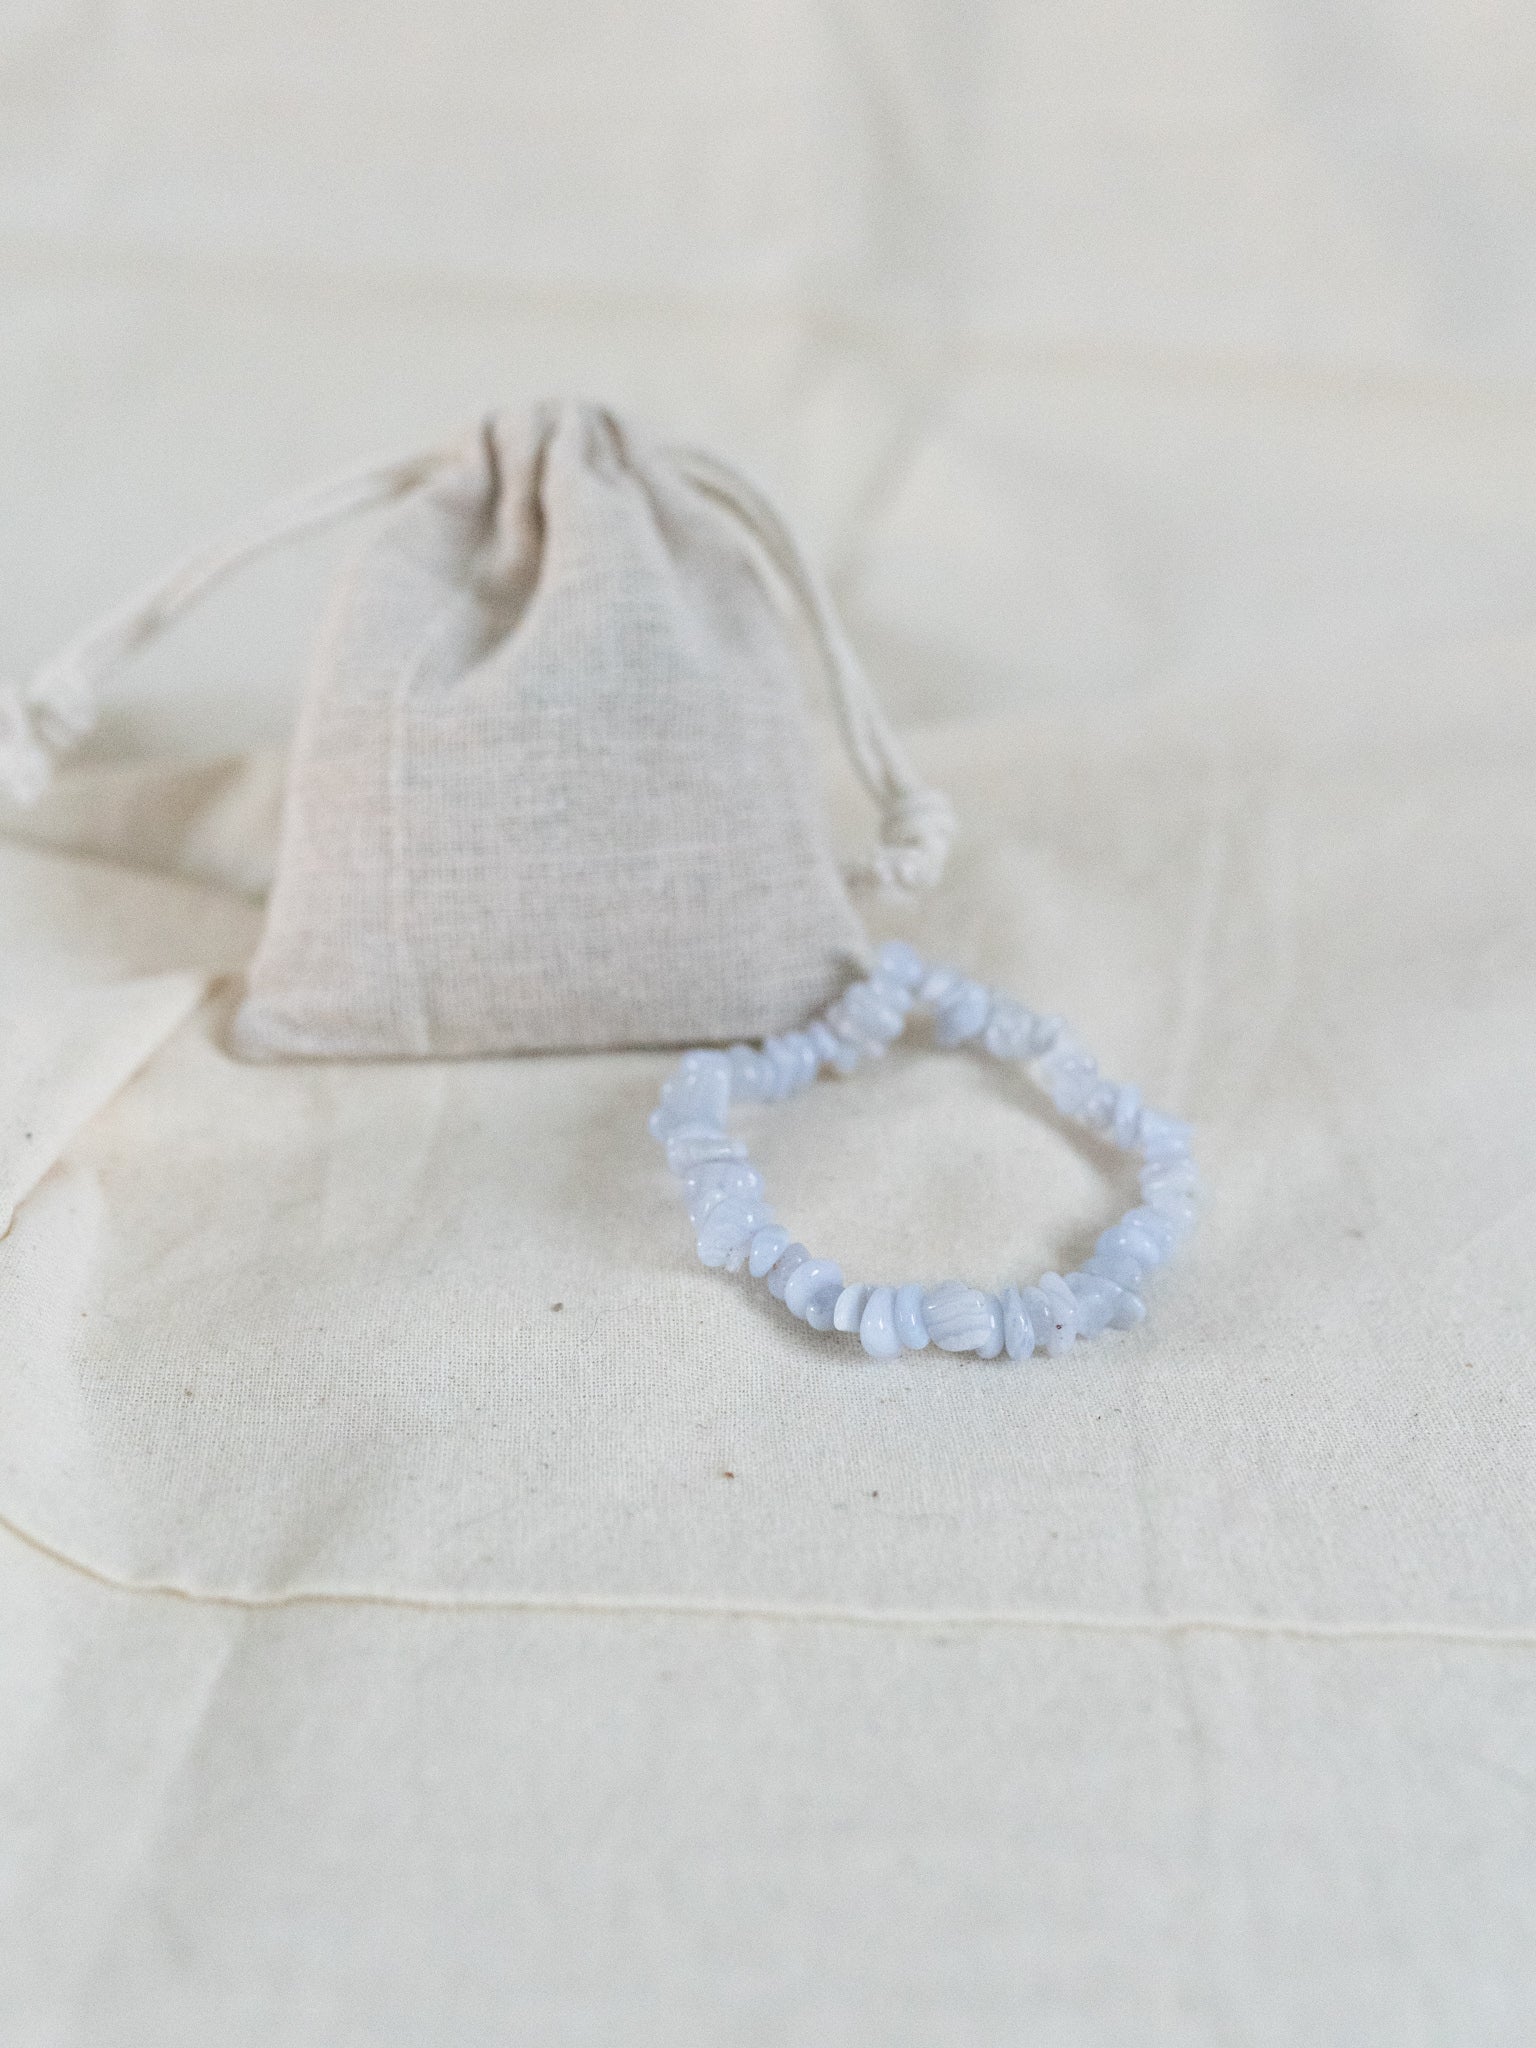 Blue Lace Agate Bracelet With Cotton Gift Bag